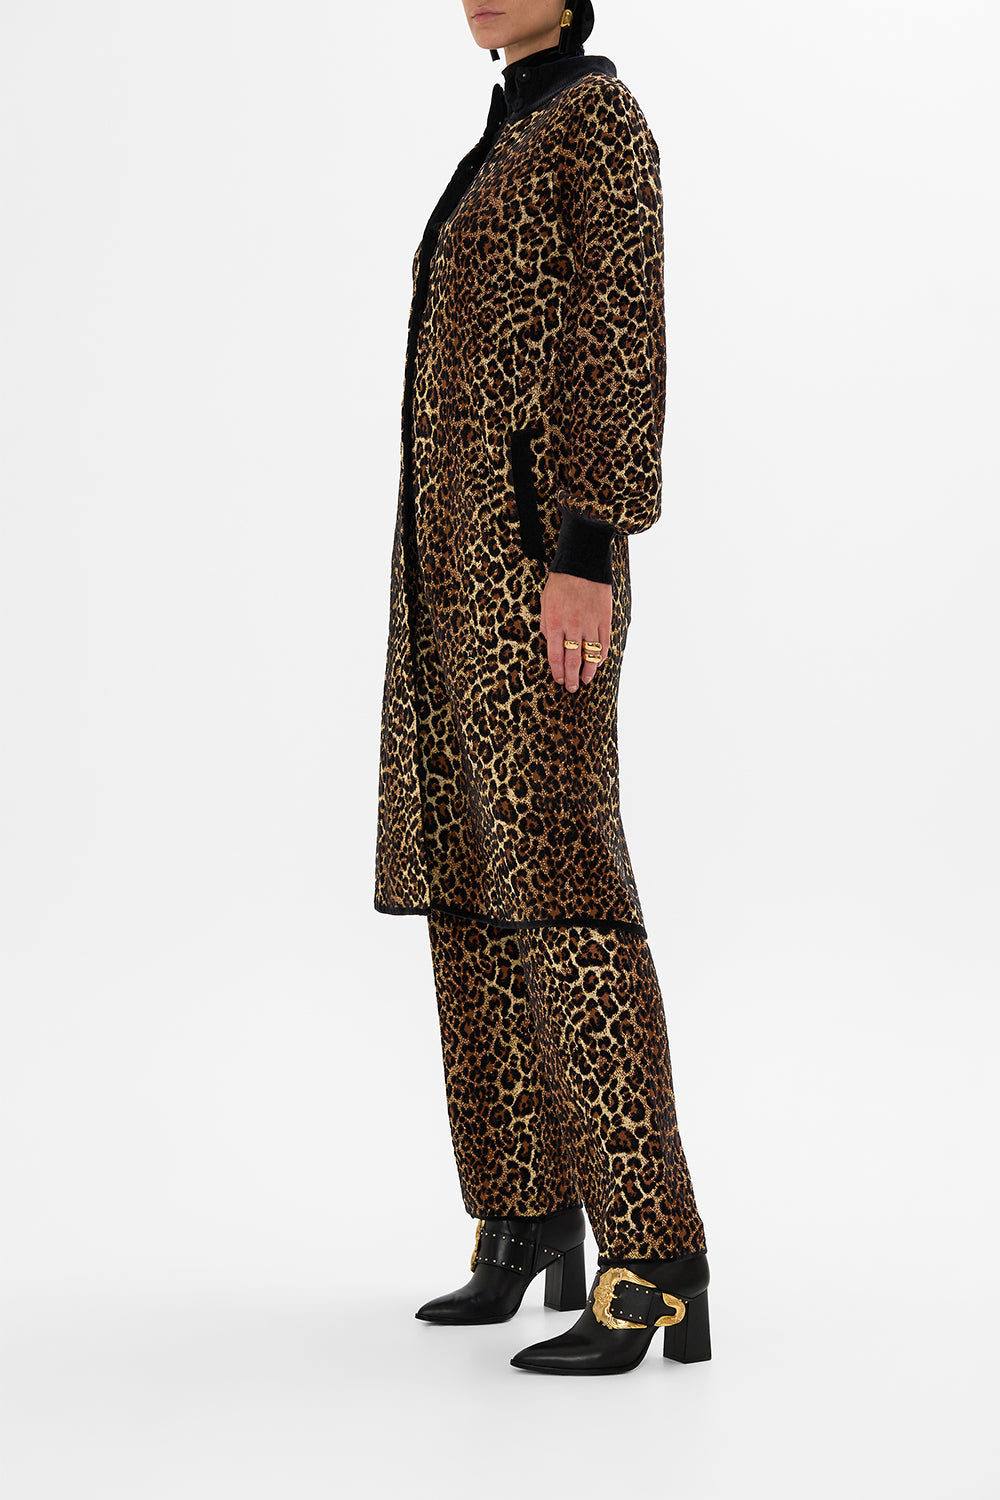 CAMILLA leopard A-line coat in Amsterglam print.